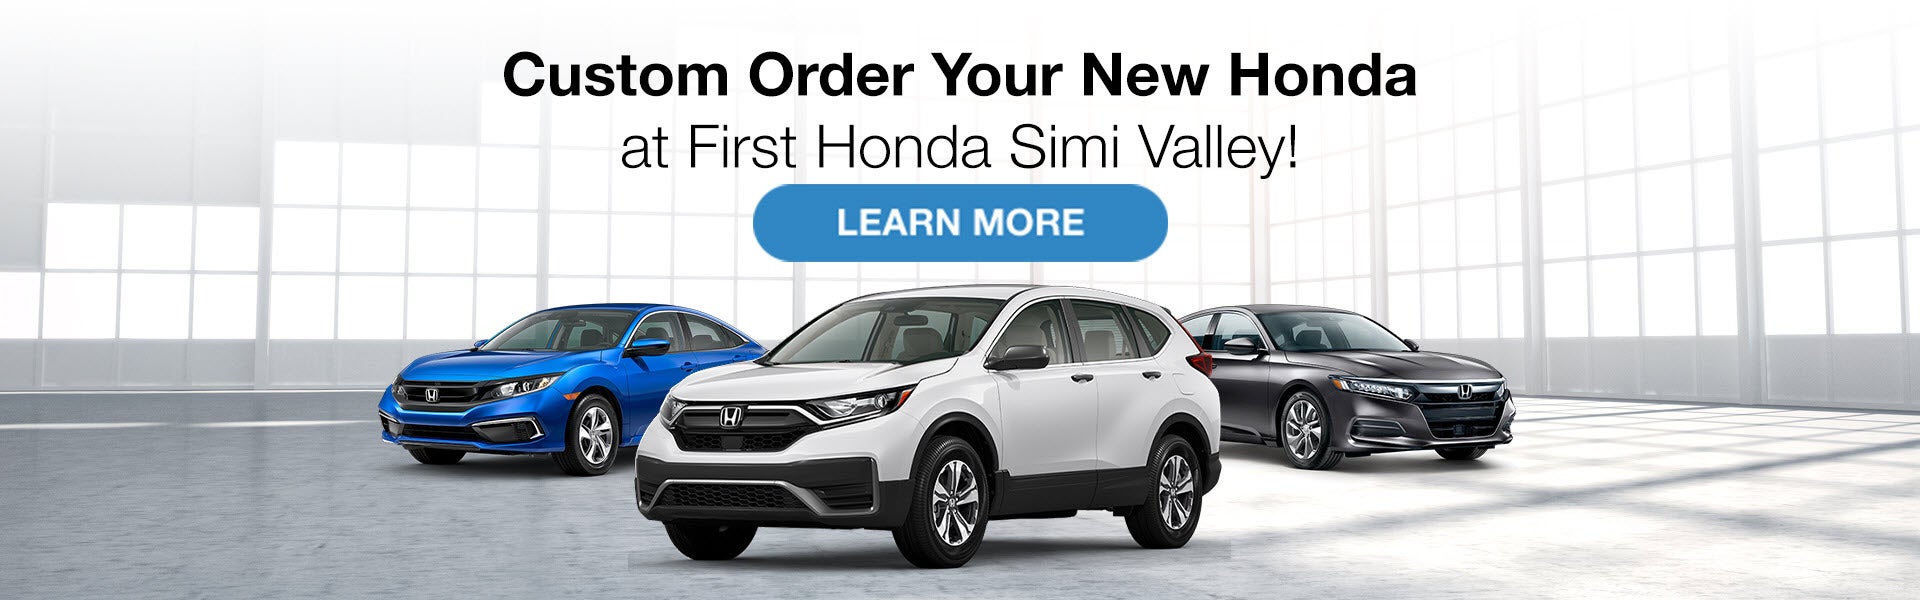 First Honda of Simi Valley Honda Dealership in Simi Valley, CA